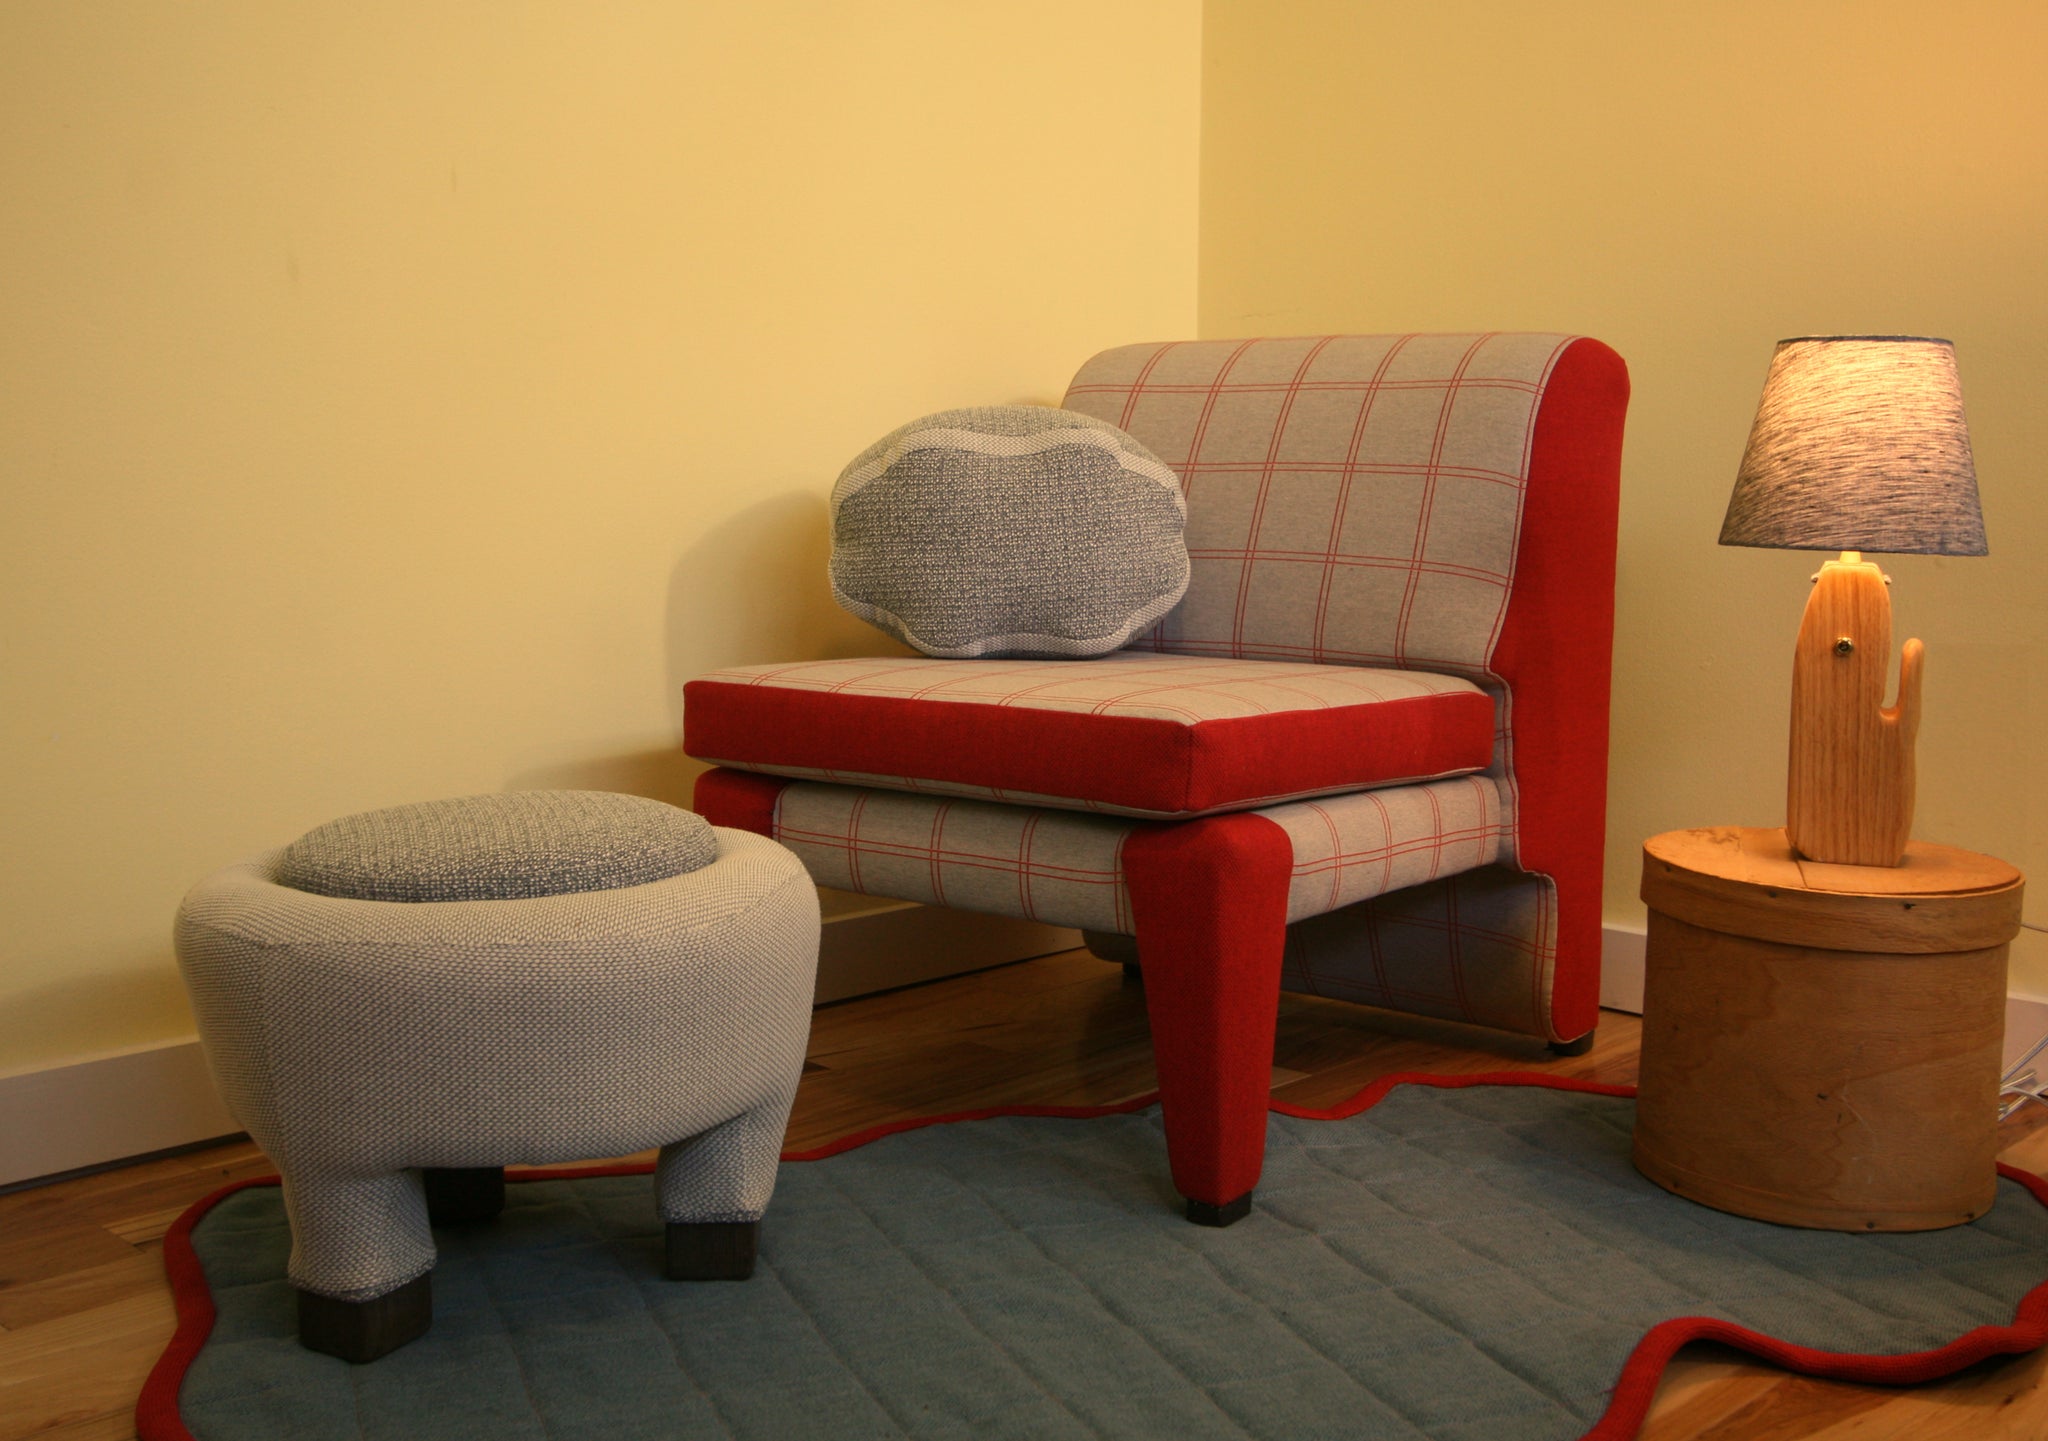 sheep ottoman, pelted grid rug, lineament chair, sheep pillow, log lamp.